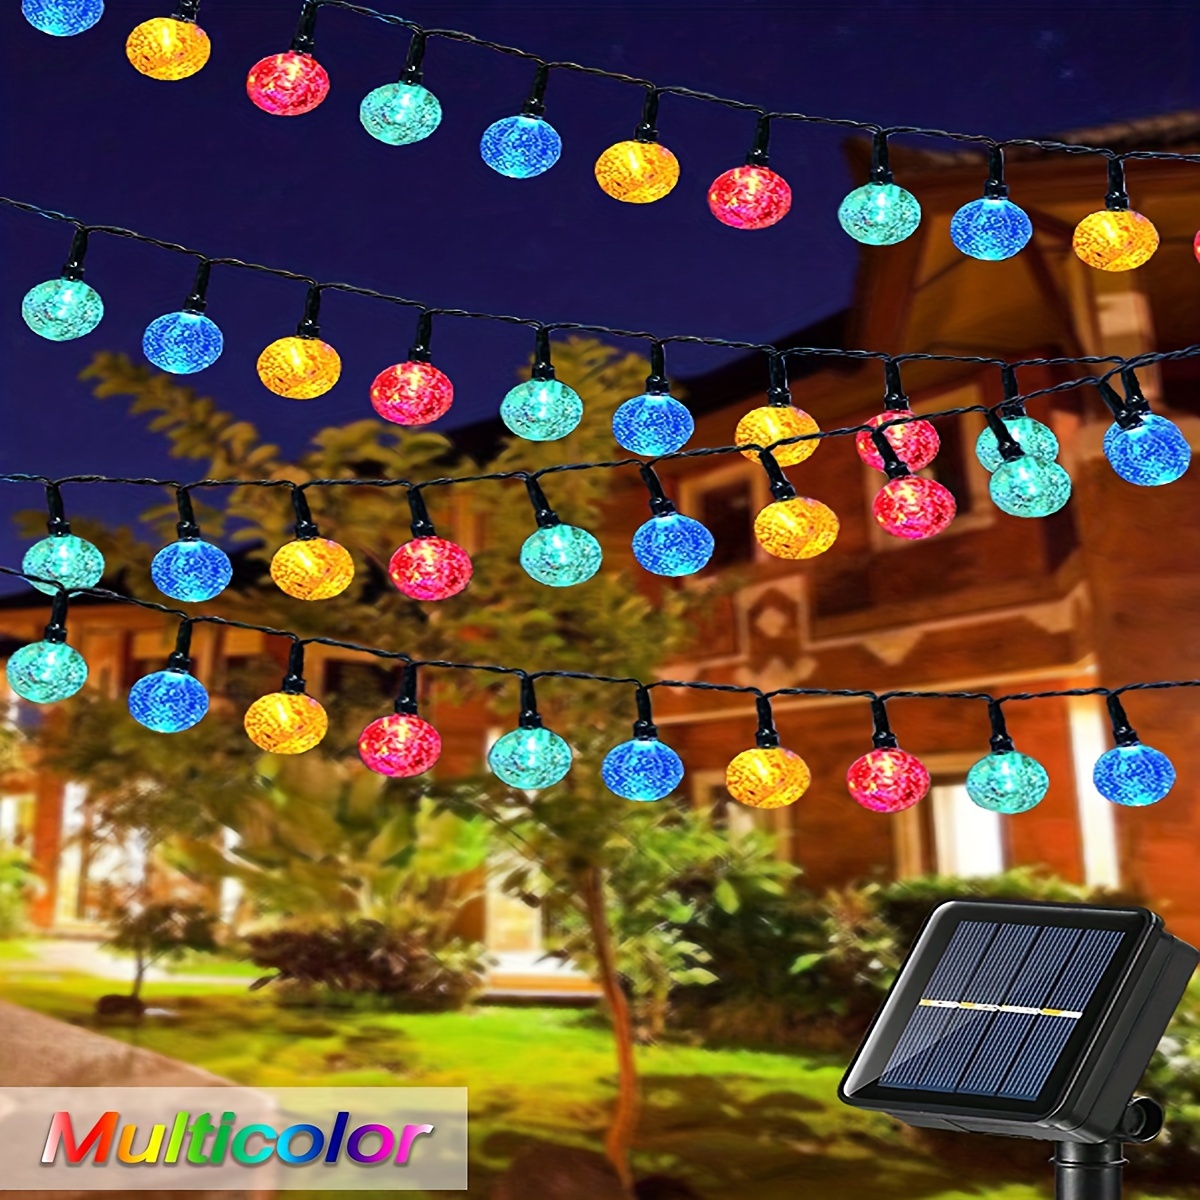 Guirlande solaire Lampions Multicolore - décoration solaire guirlande